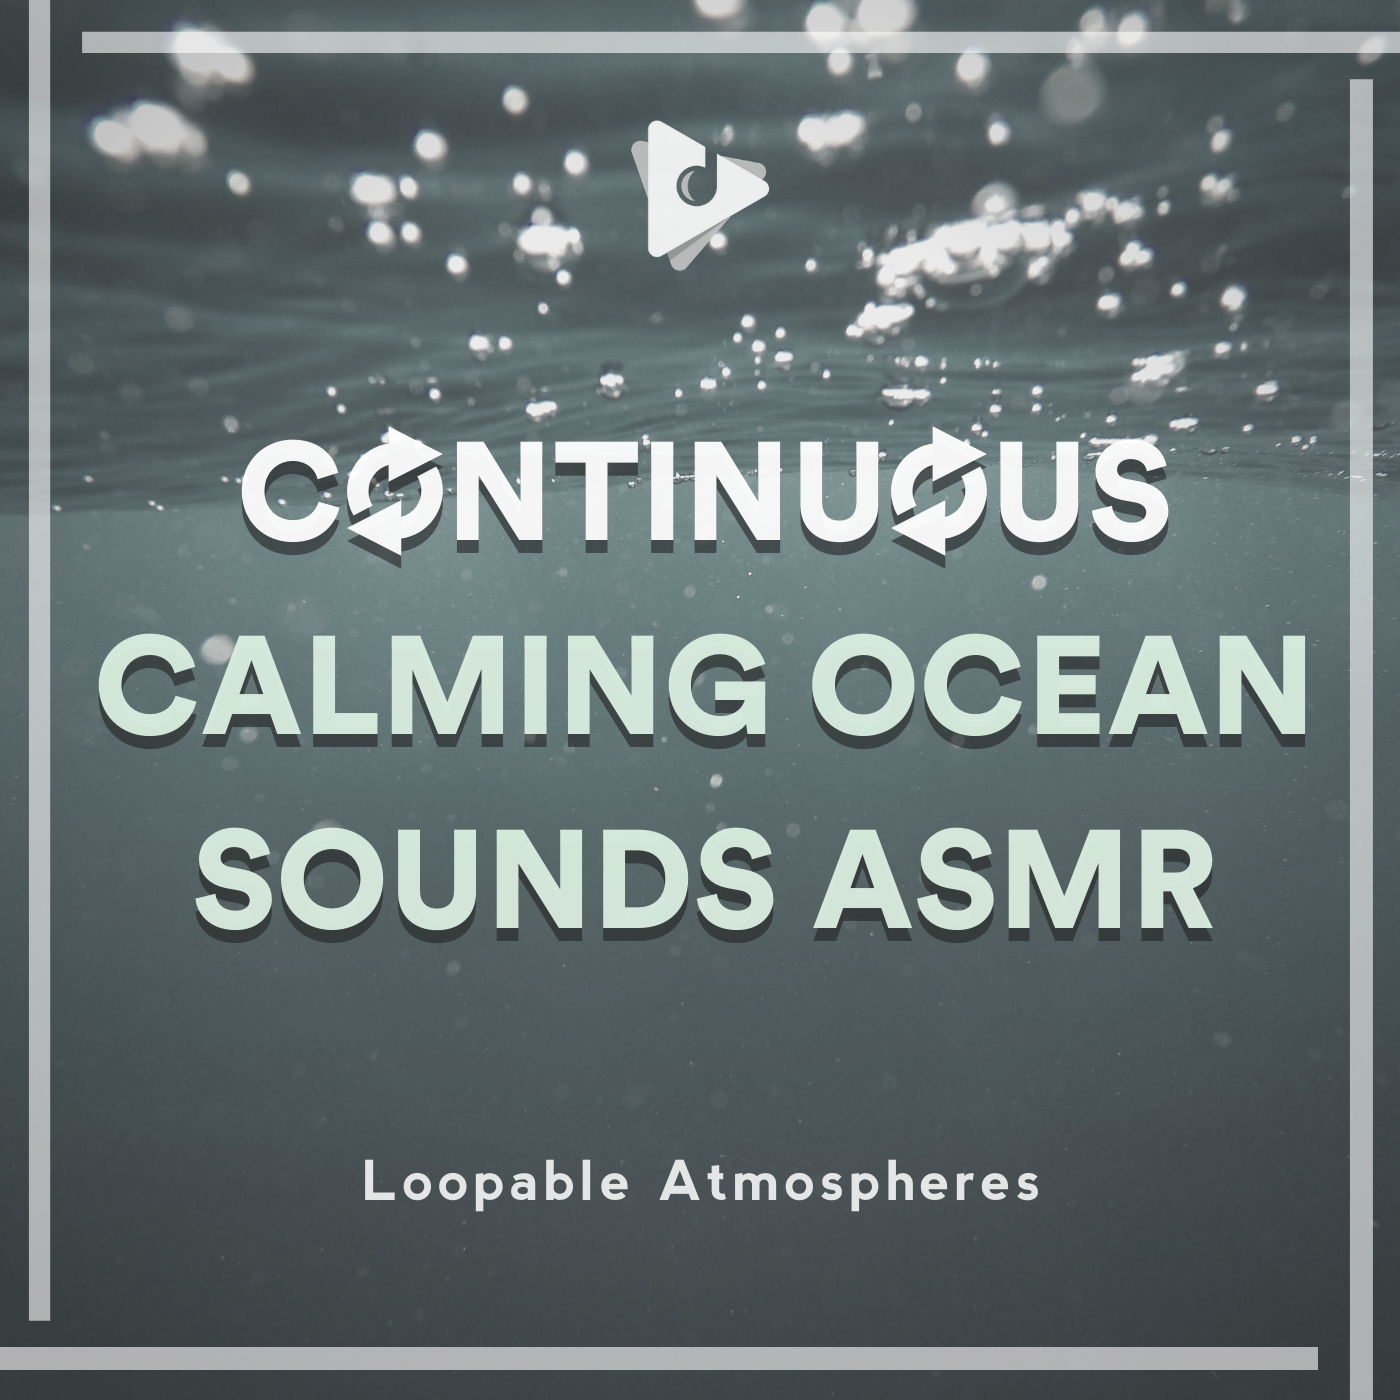 Continuous Calming Ocean Sounds ASMR